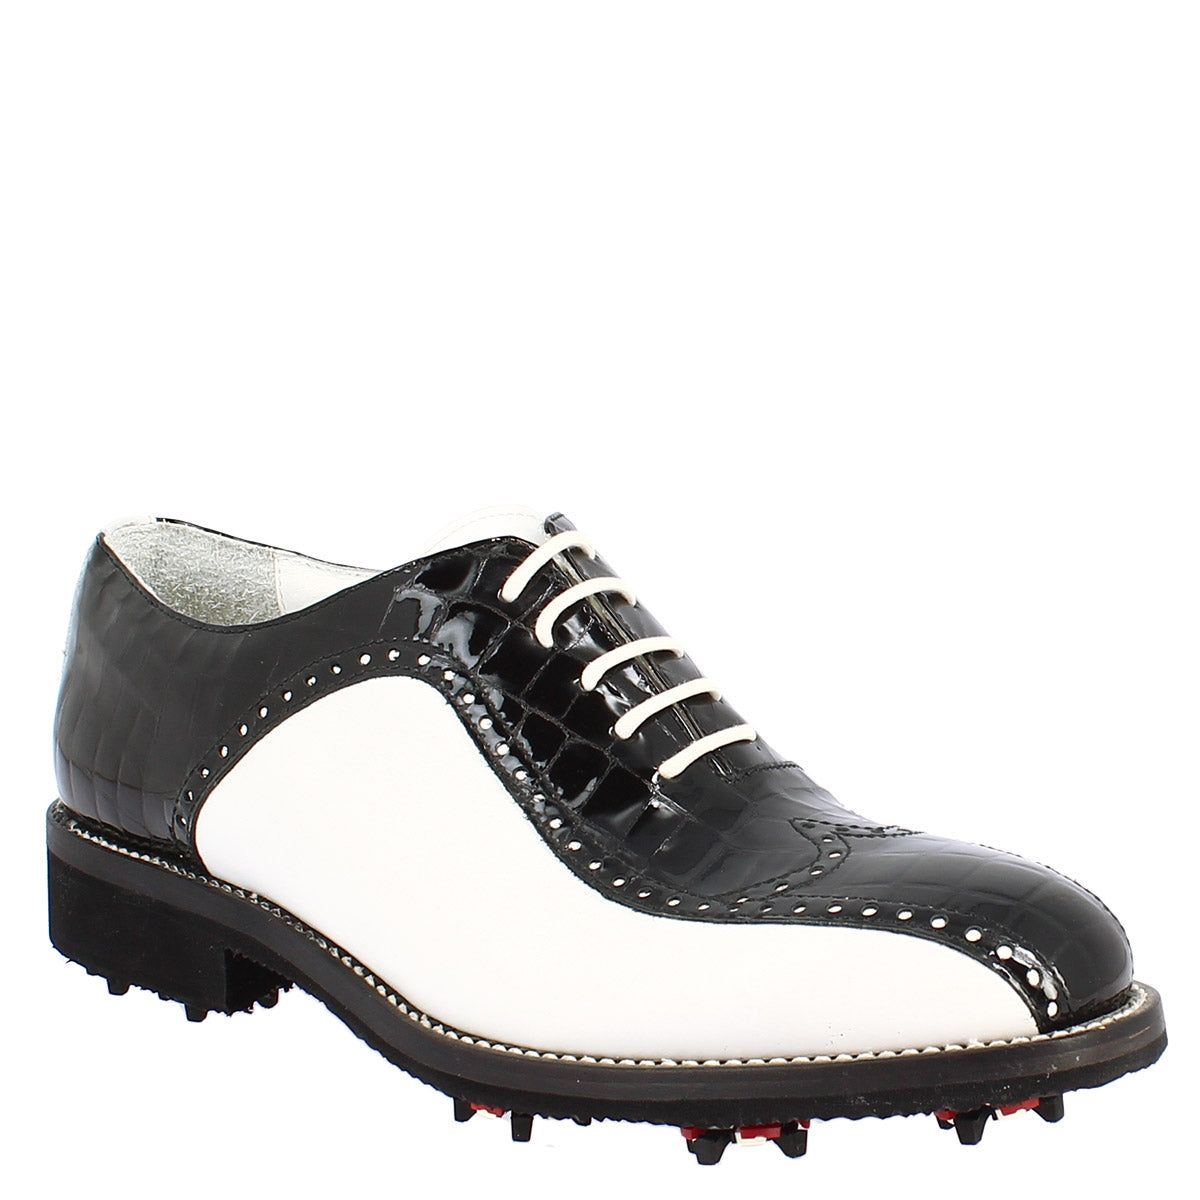 Handmade women's golf shoes in black crocodile white full-grain leather